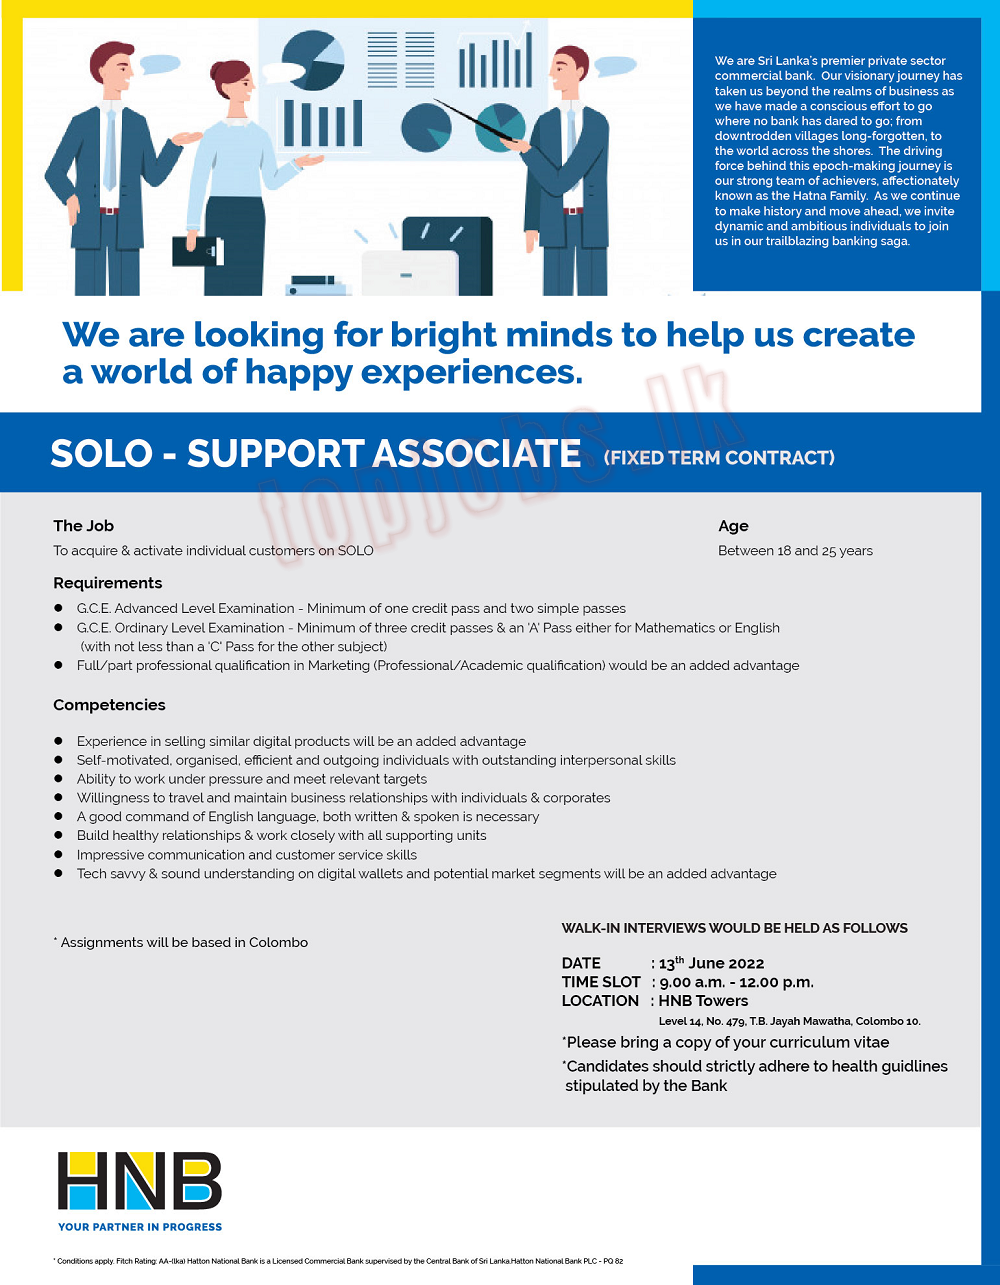 SOLO Support Associate Jobs Vacancies in HNB Bank Jobs Vacancies